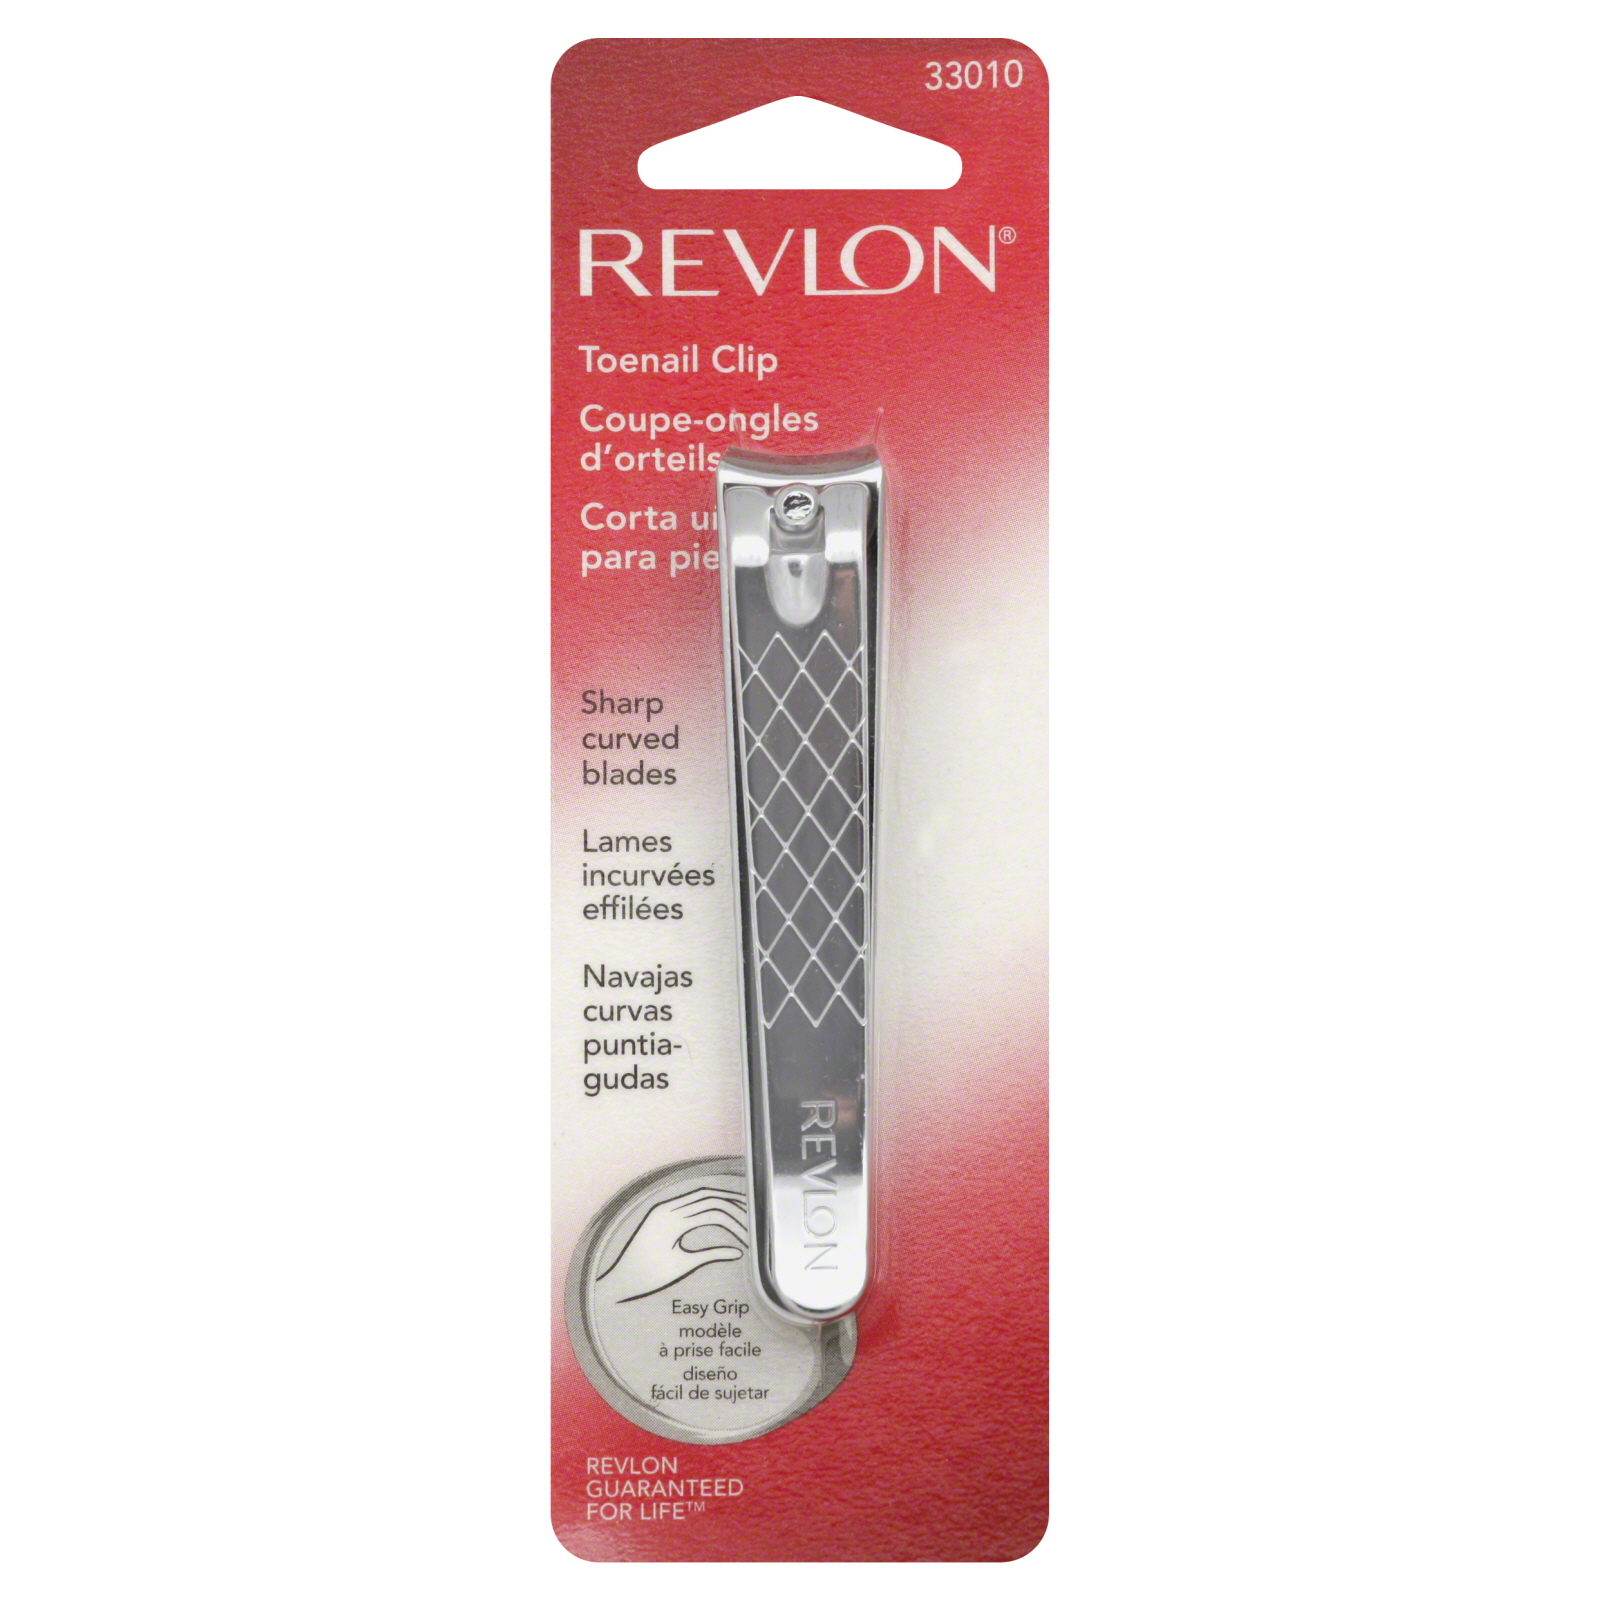 Revlon Toenail Clip, 1 clipper